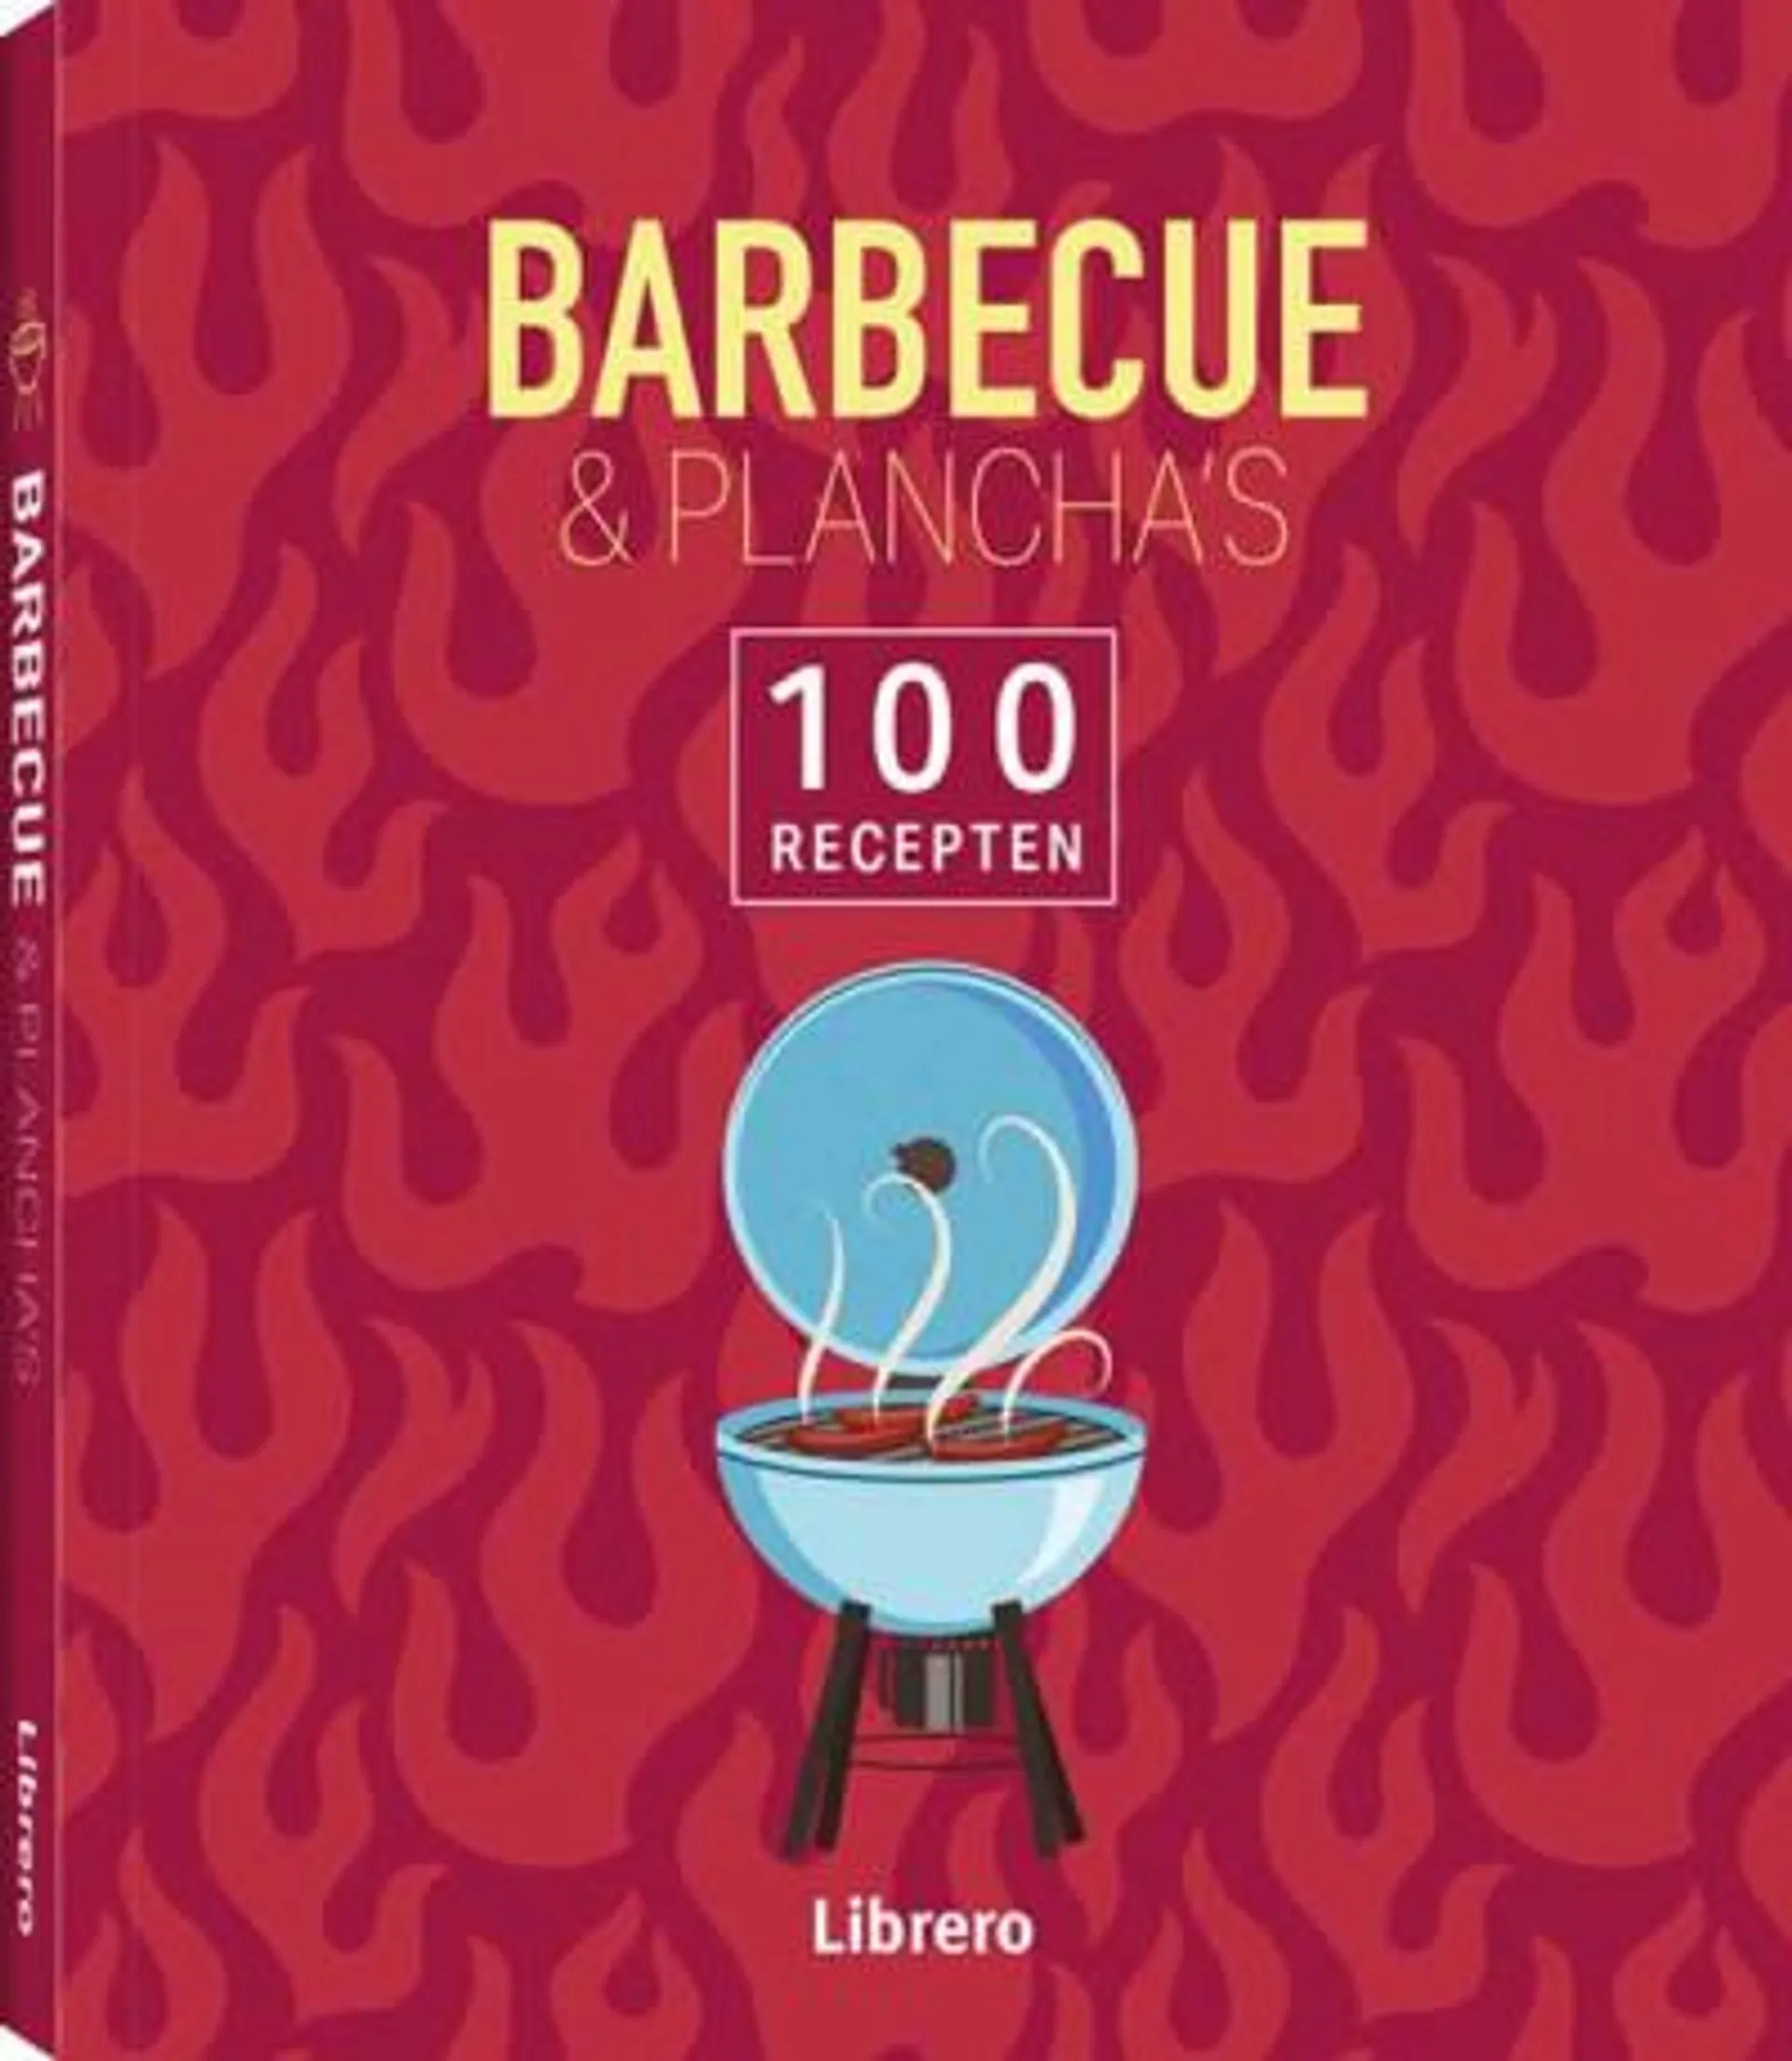 Barbecue & Plancha's